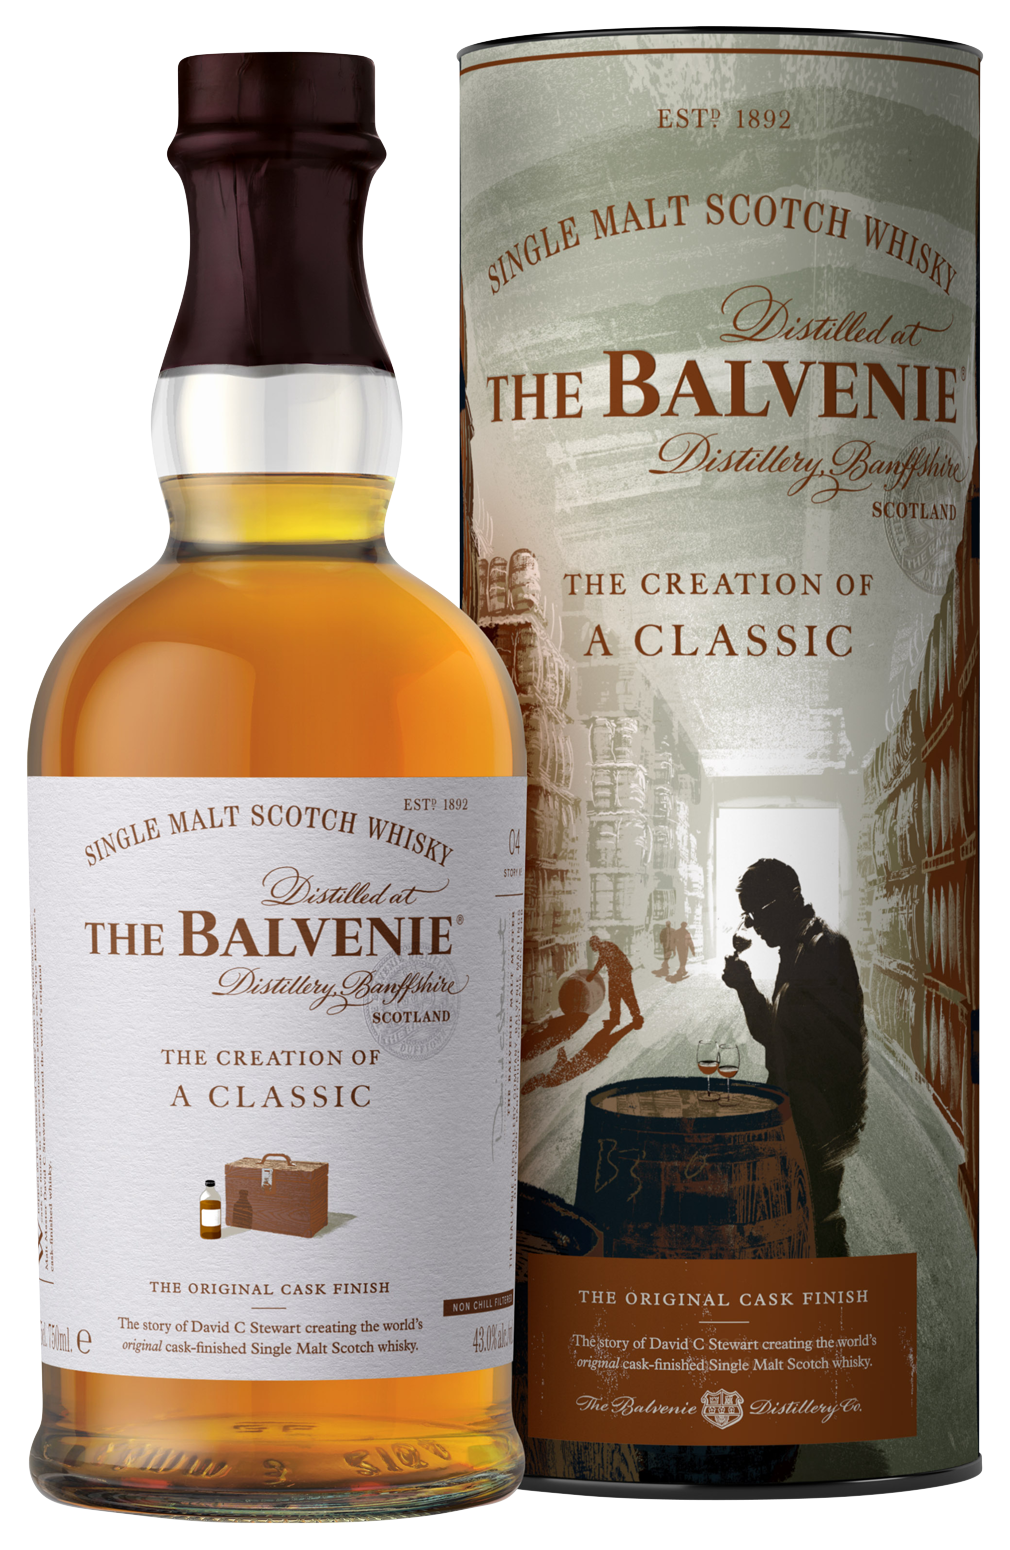 The Balvenie The Creation of A Classic Speyside Single Malt Scotch Whisky